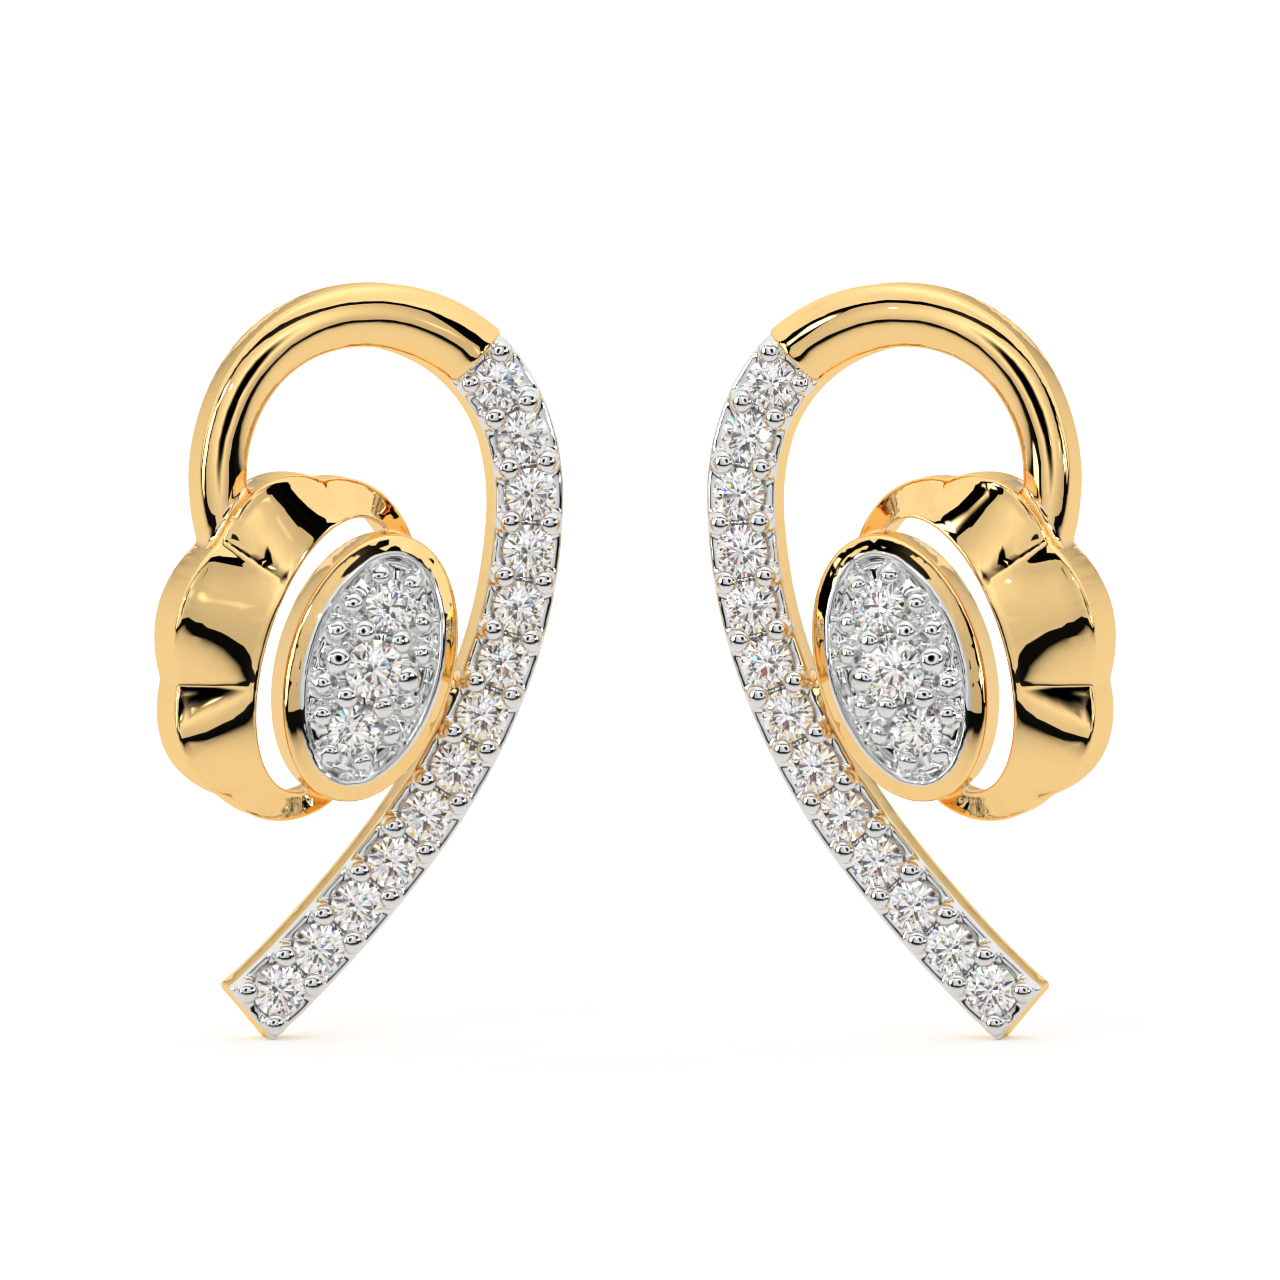 The Gorgeously Grecian Diamond Earrings